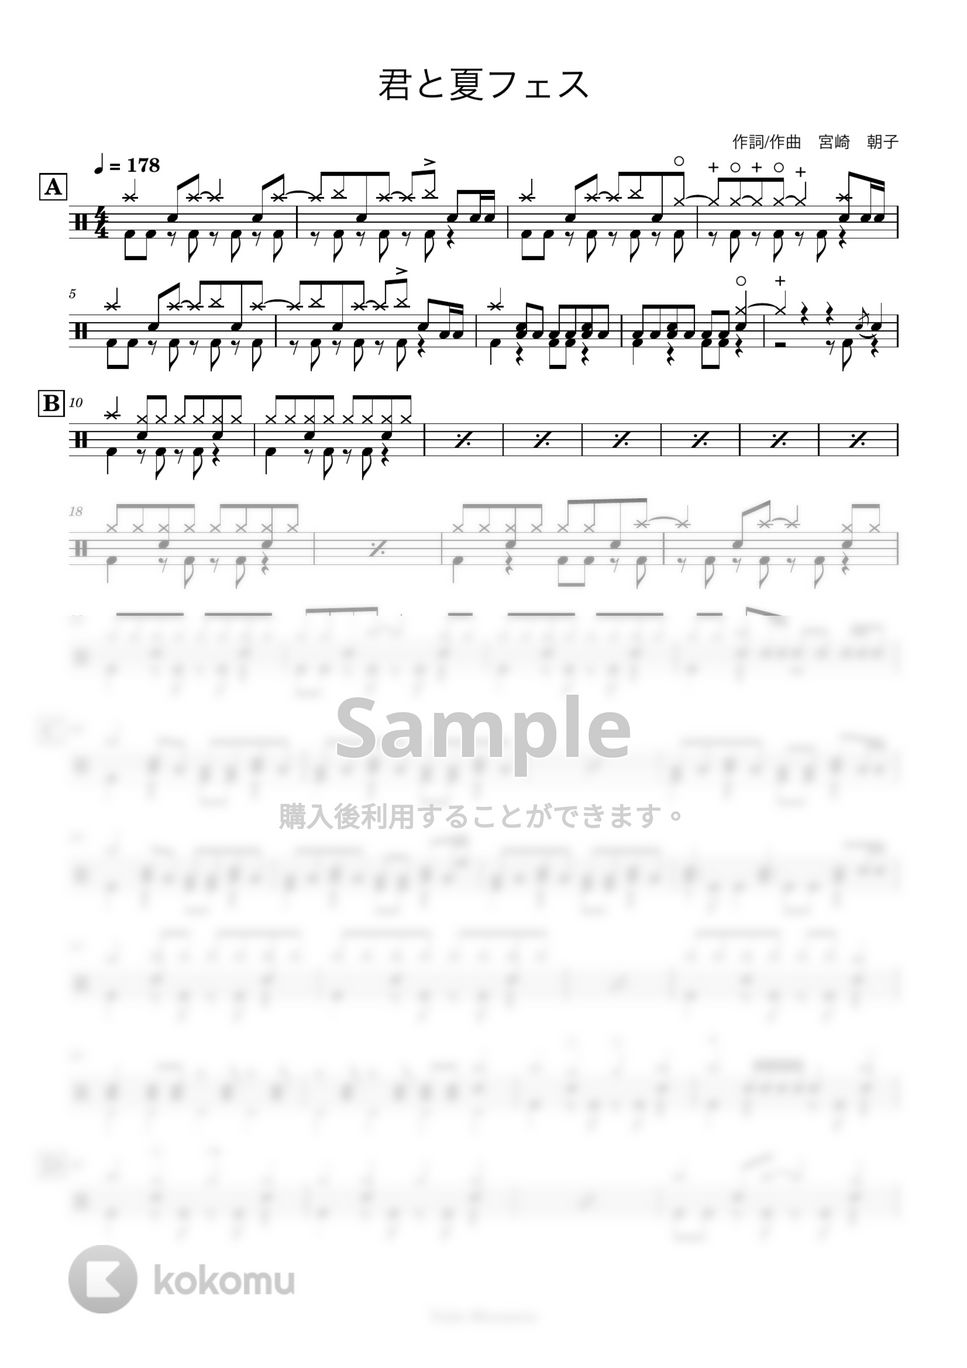 SHISHAMO - 【ドラム譜】君と夏フェス【完コピ】 by Taiki Mizumoto